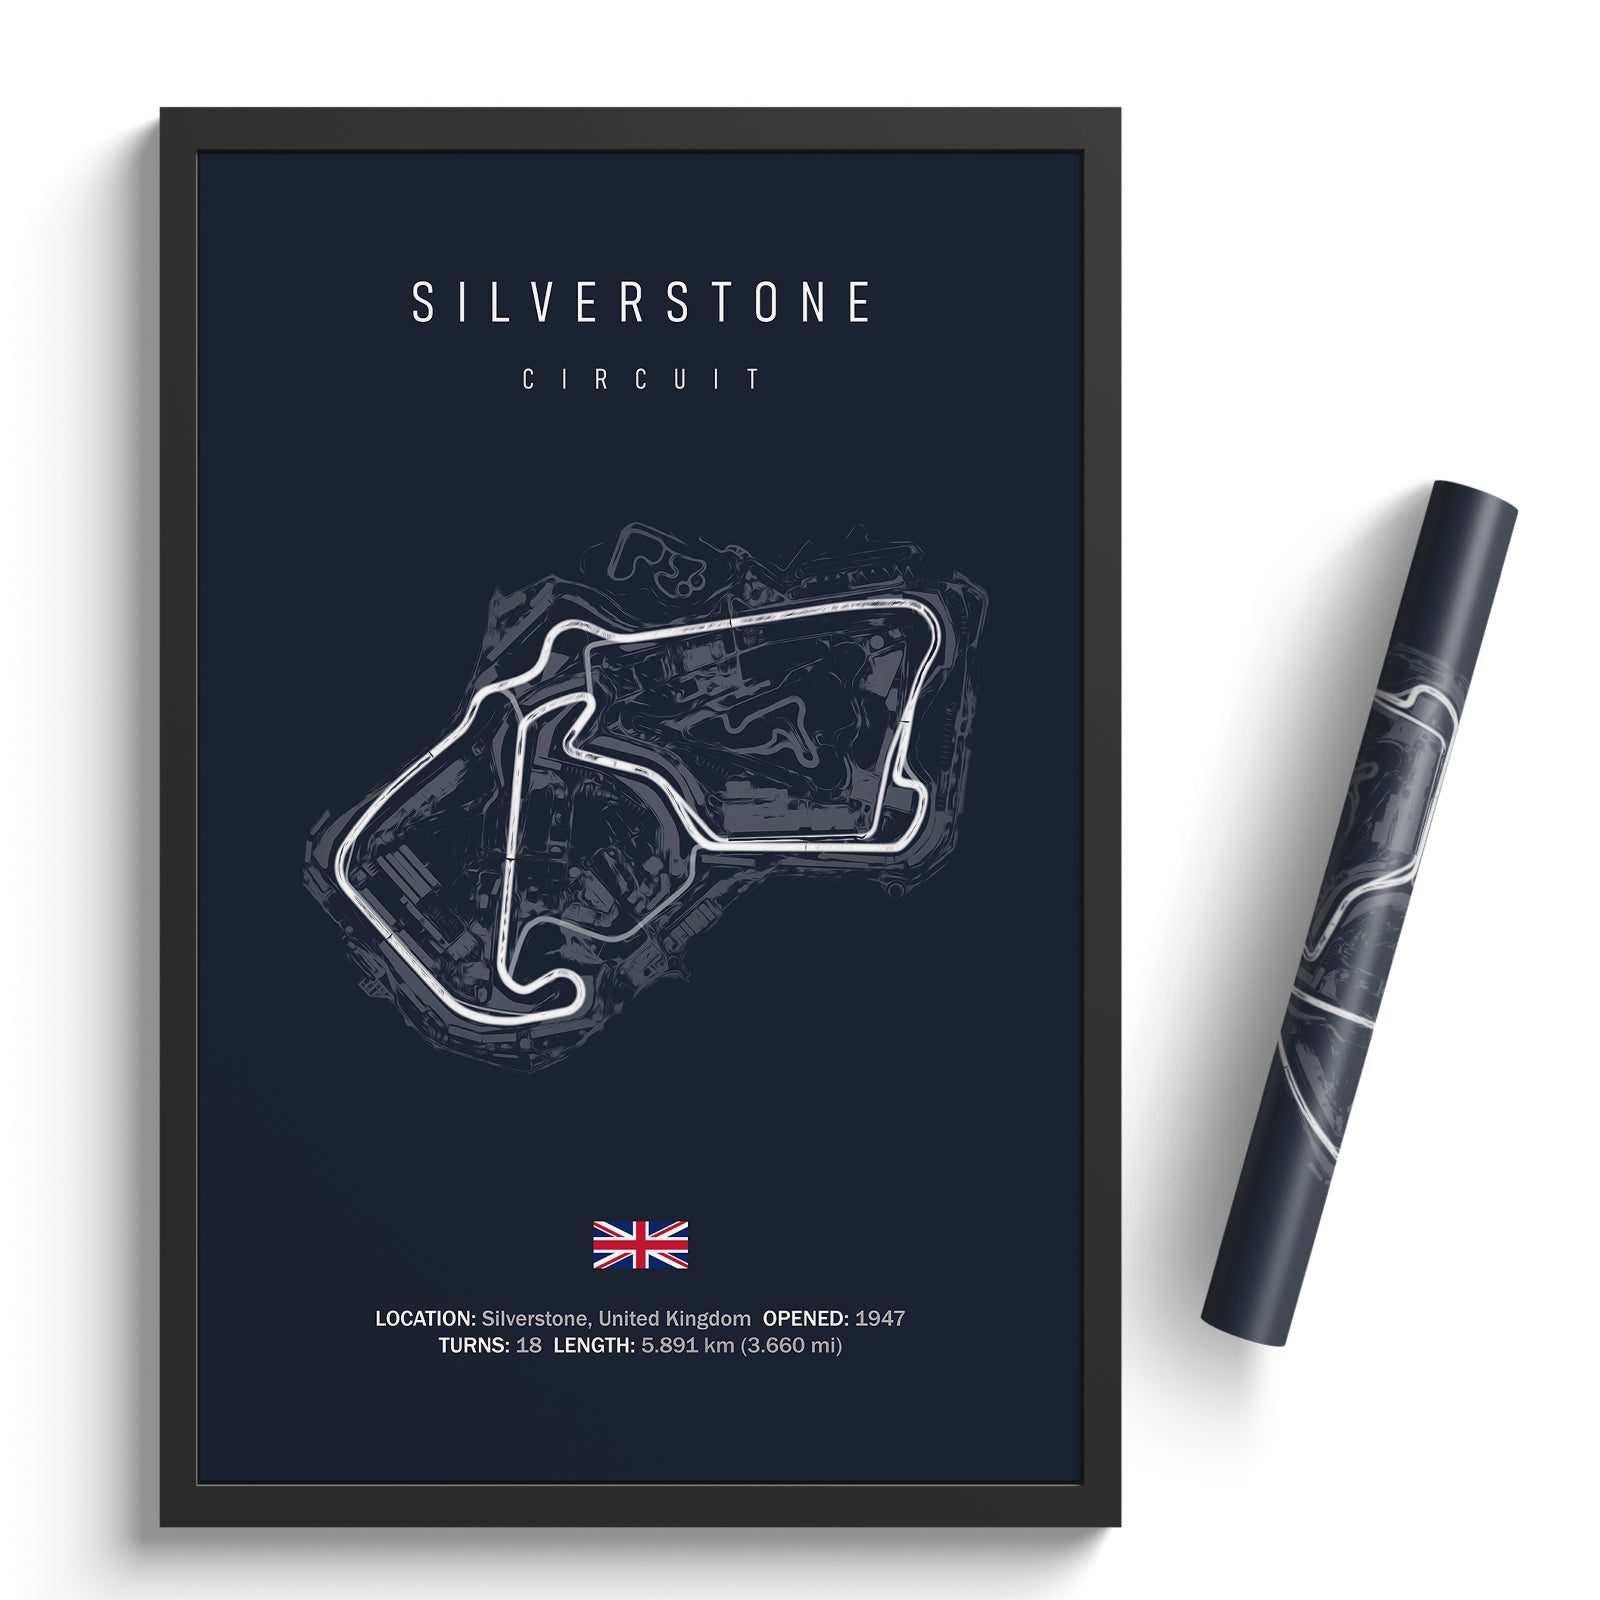 Silverstone Circuit - Racetrack Poster Print